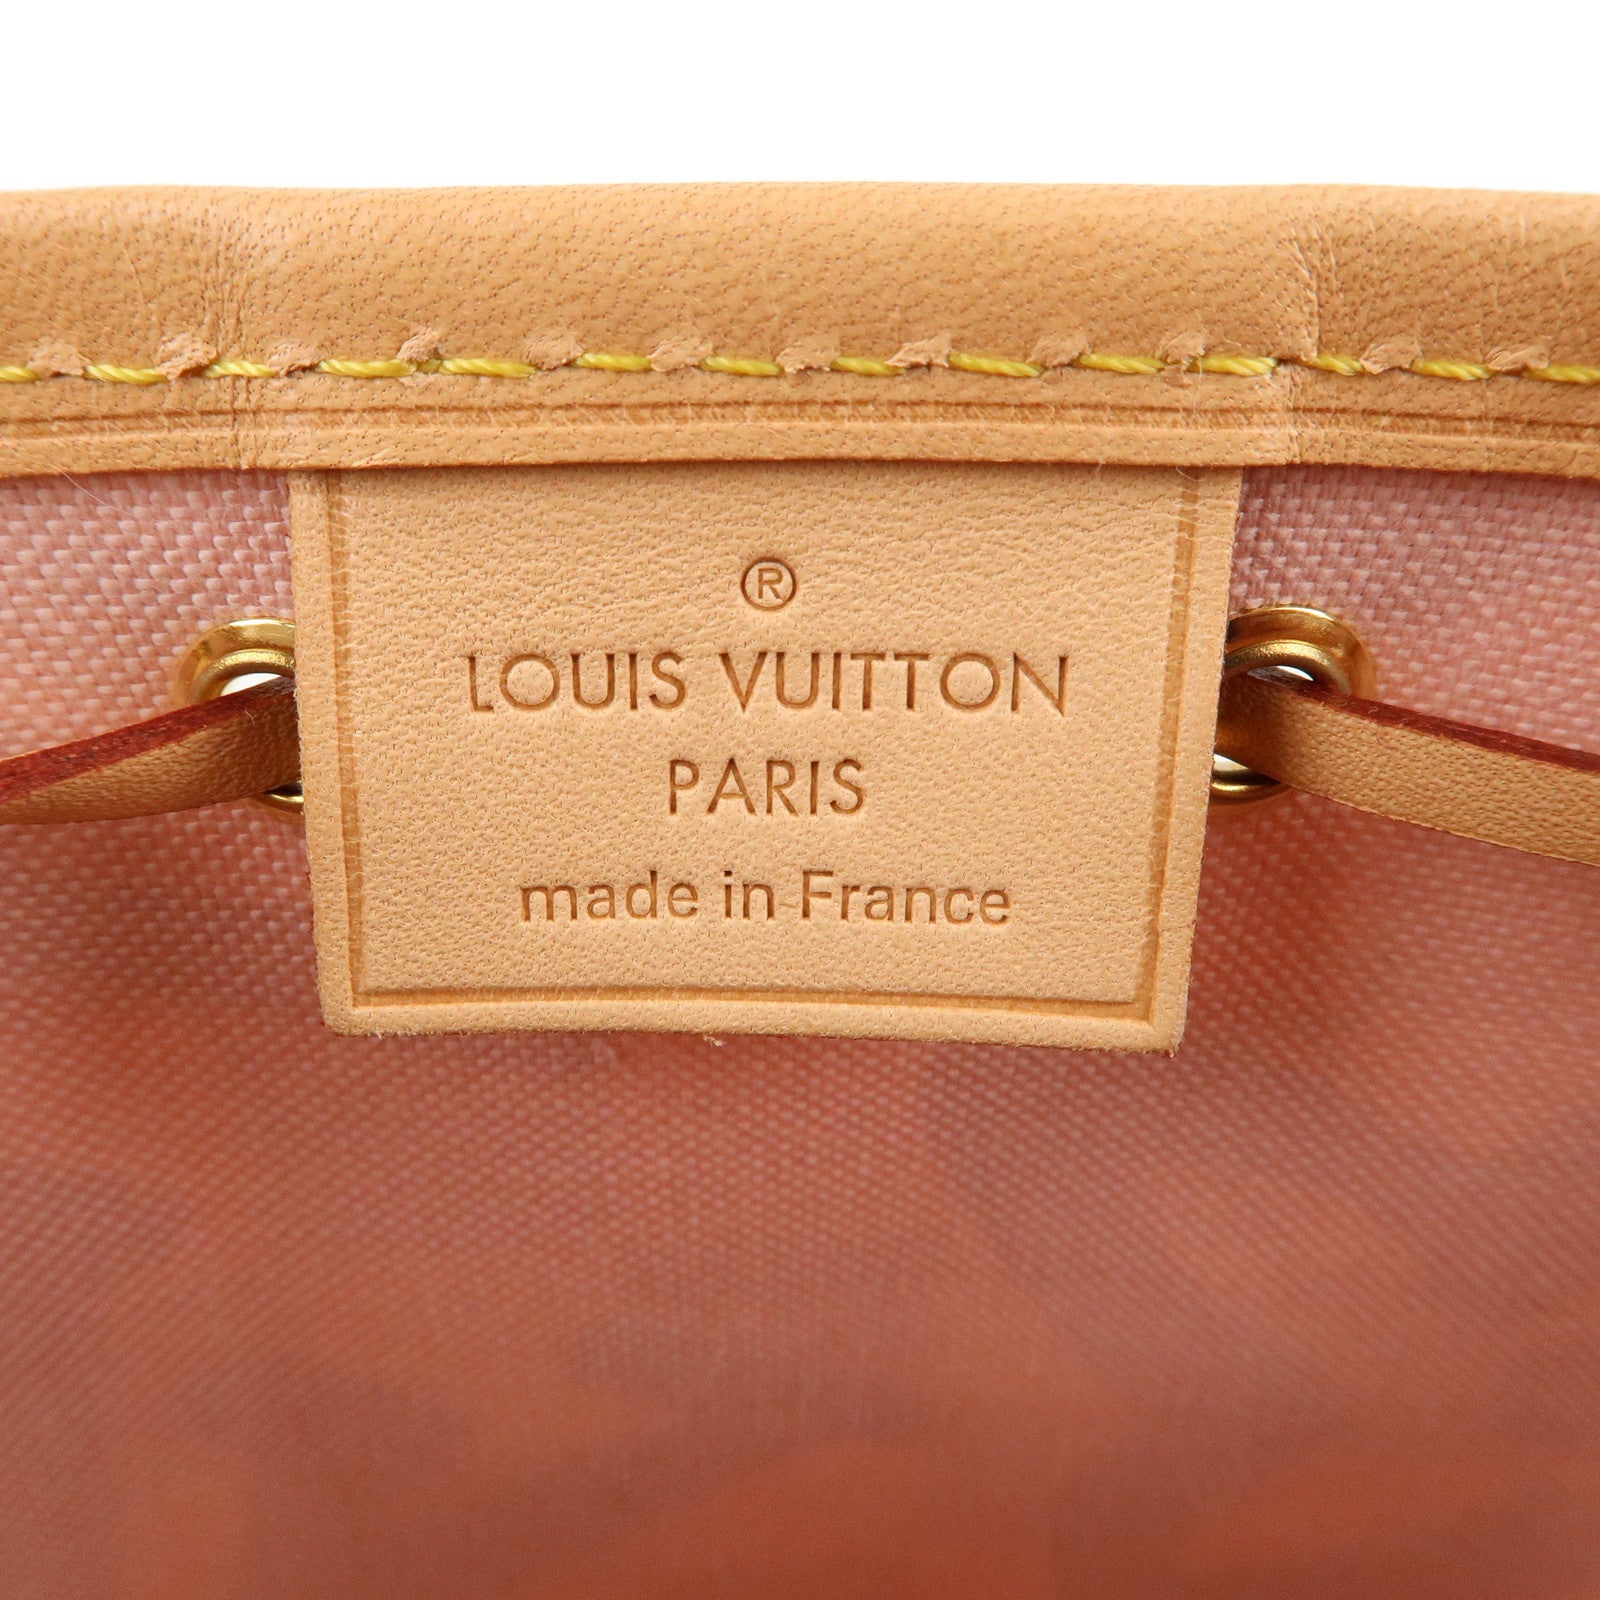 Nano's Shopping - *Louis Vuitton wallets made in Turkey